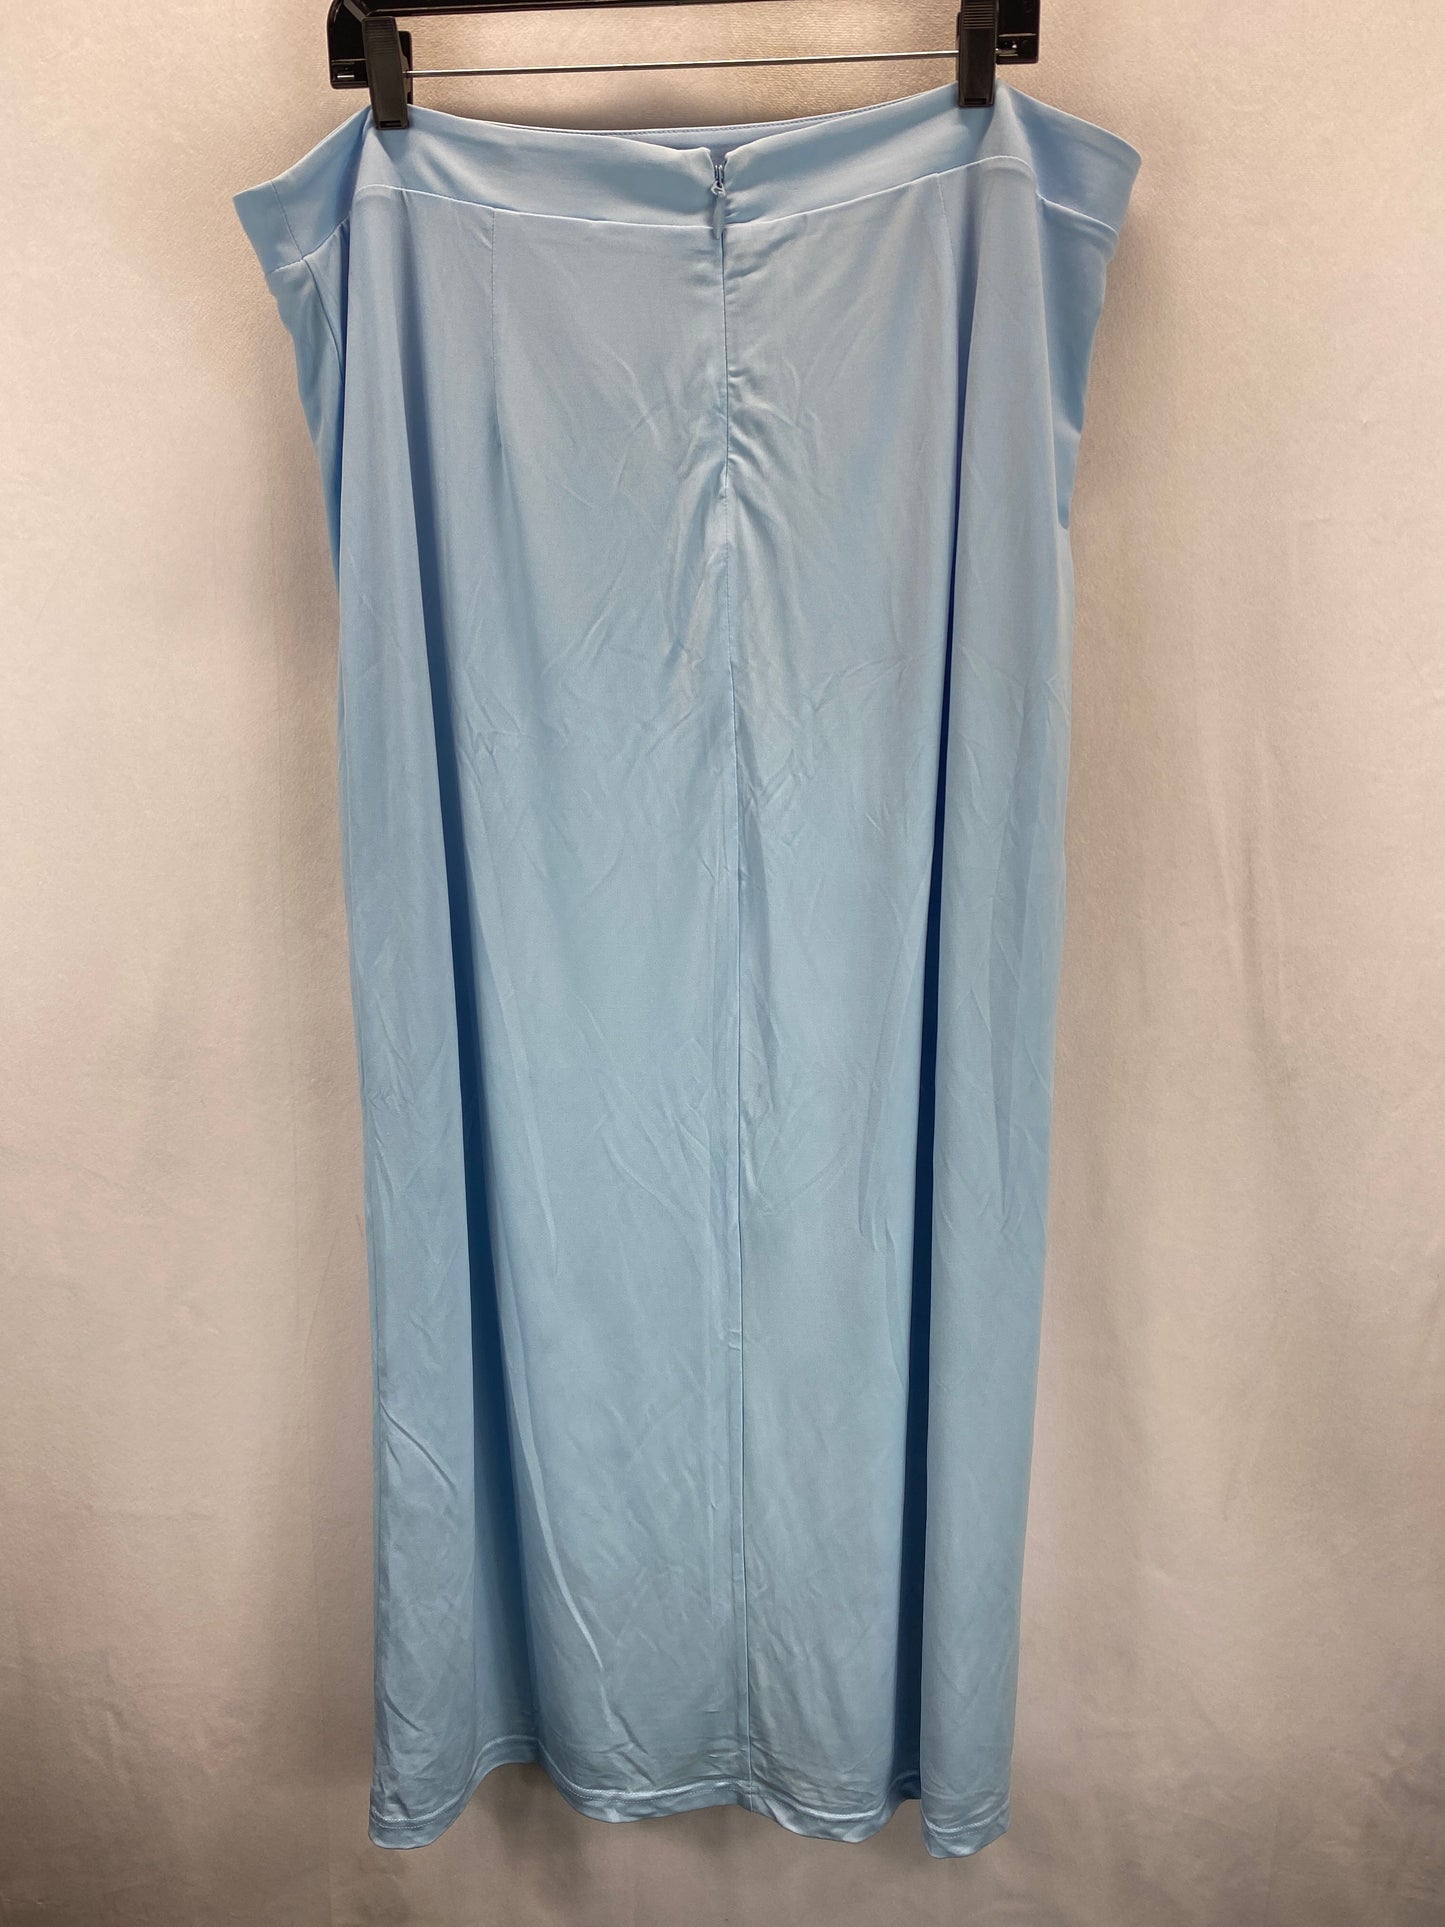 Blue Skirt Midi Clothes Mentor, Size Xxl